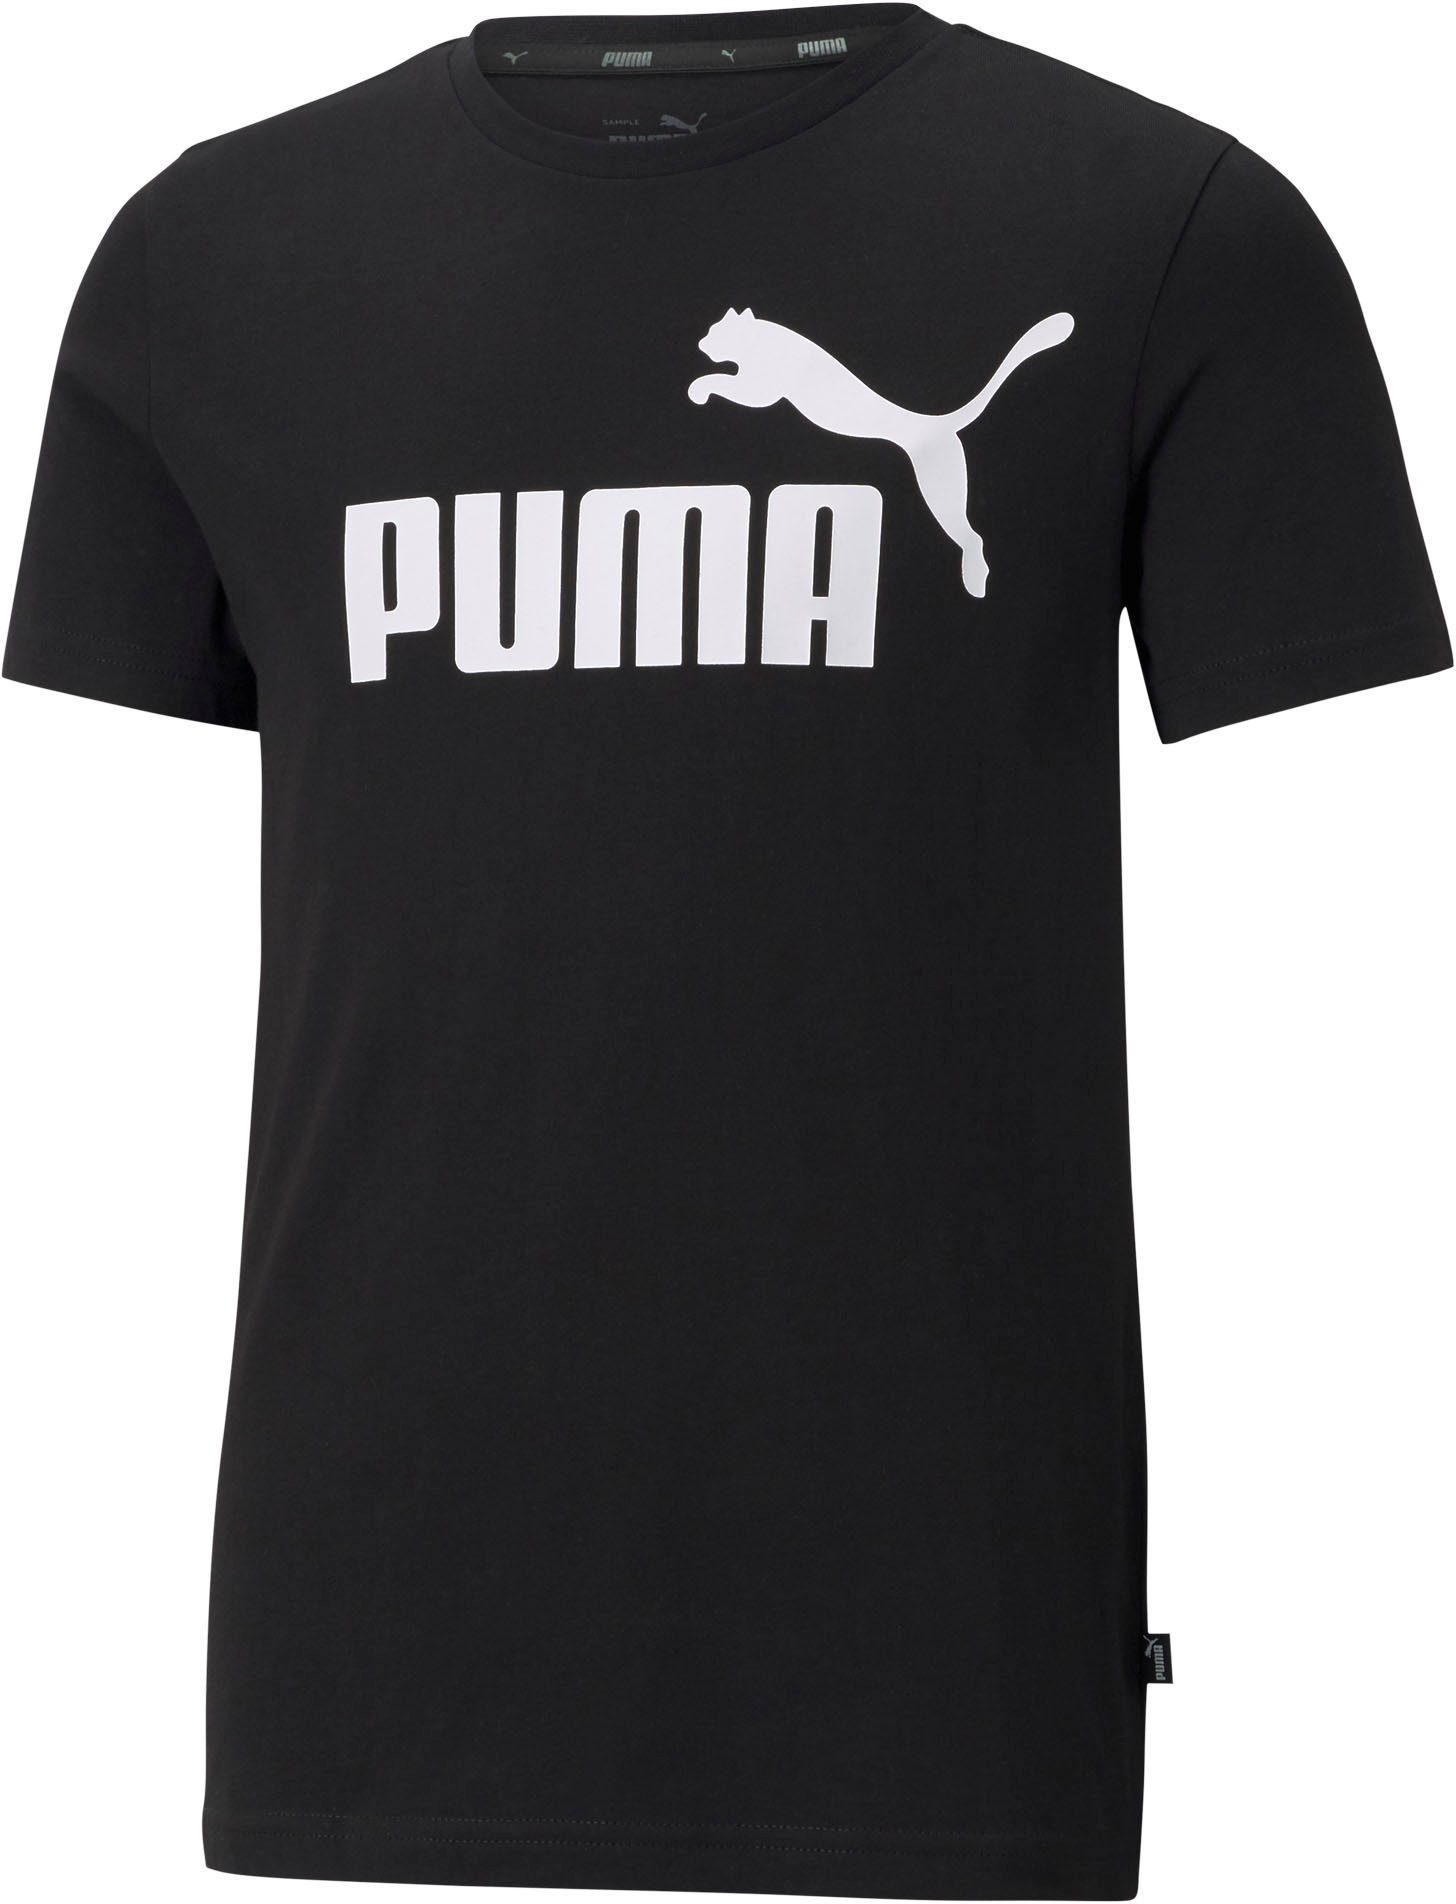 TEE T-Shirt Puma B LOGO PUMA ESS Black